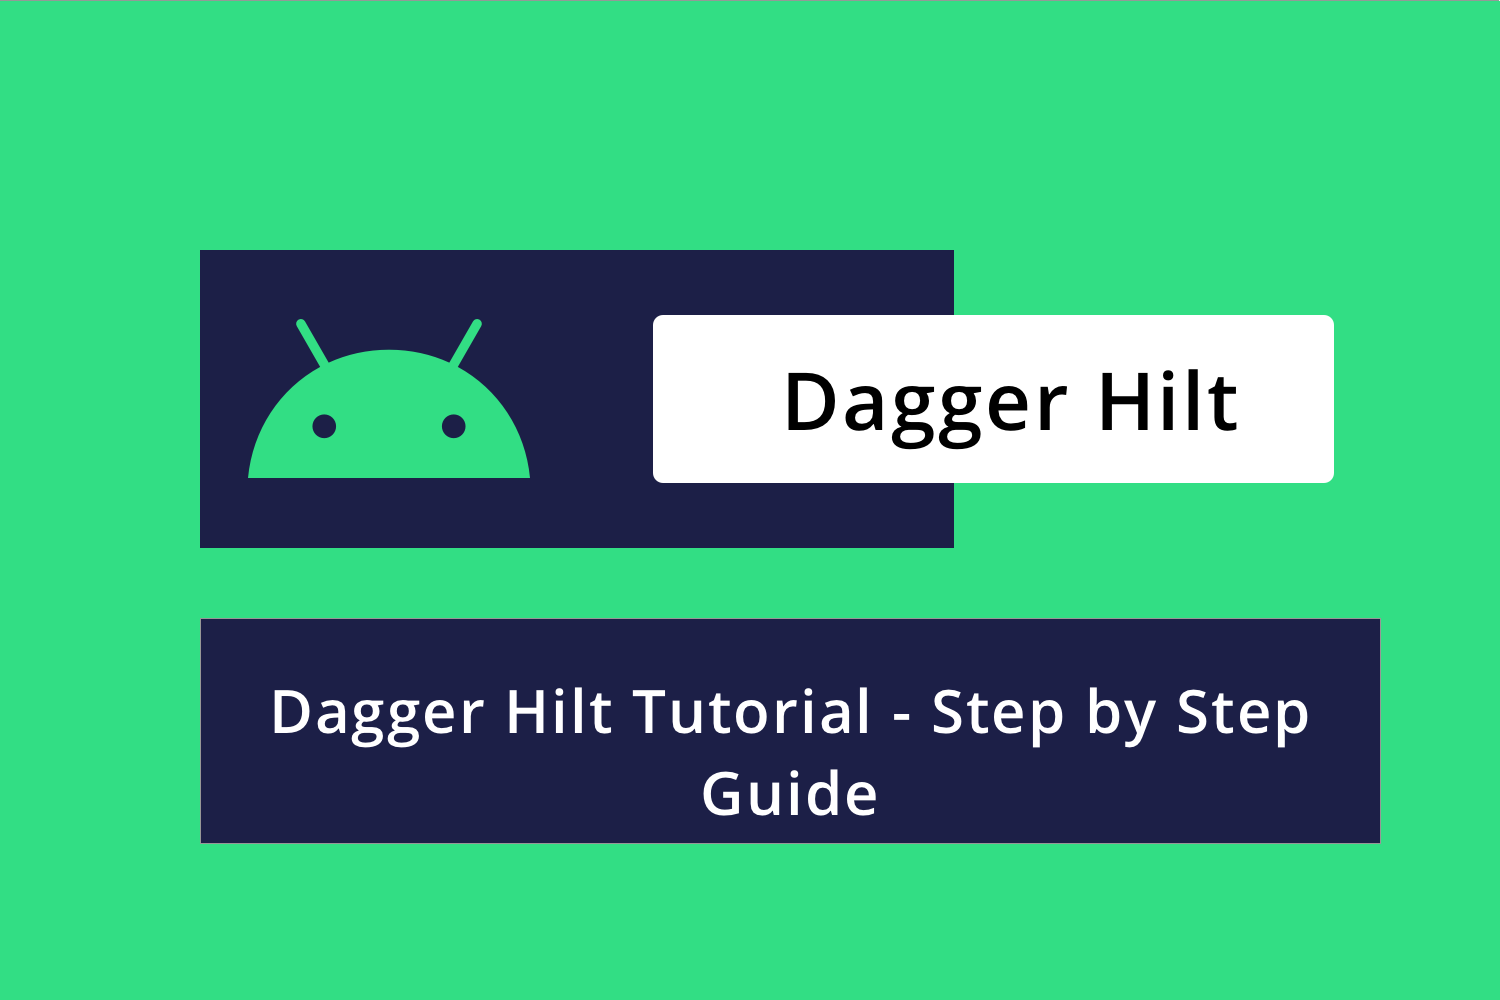 Dagger Hilt Tutorial - Step by Step Guide